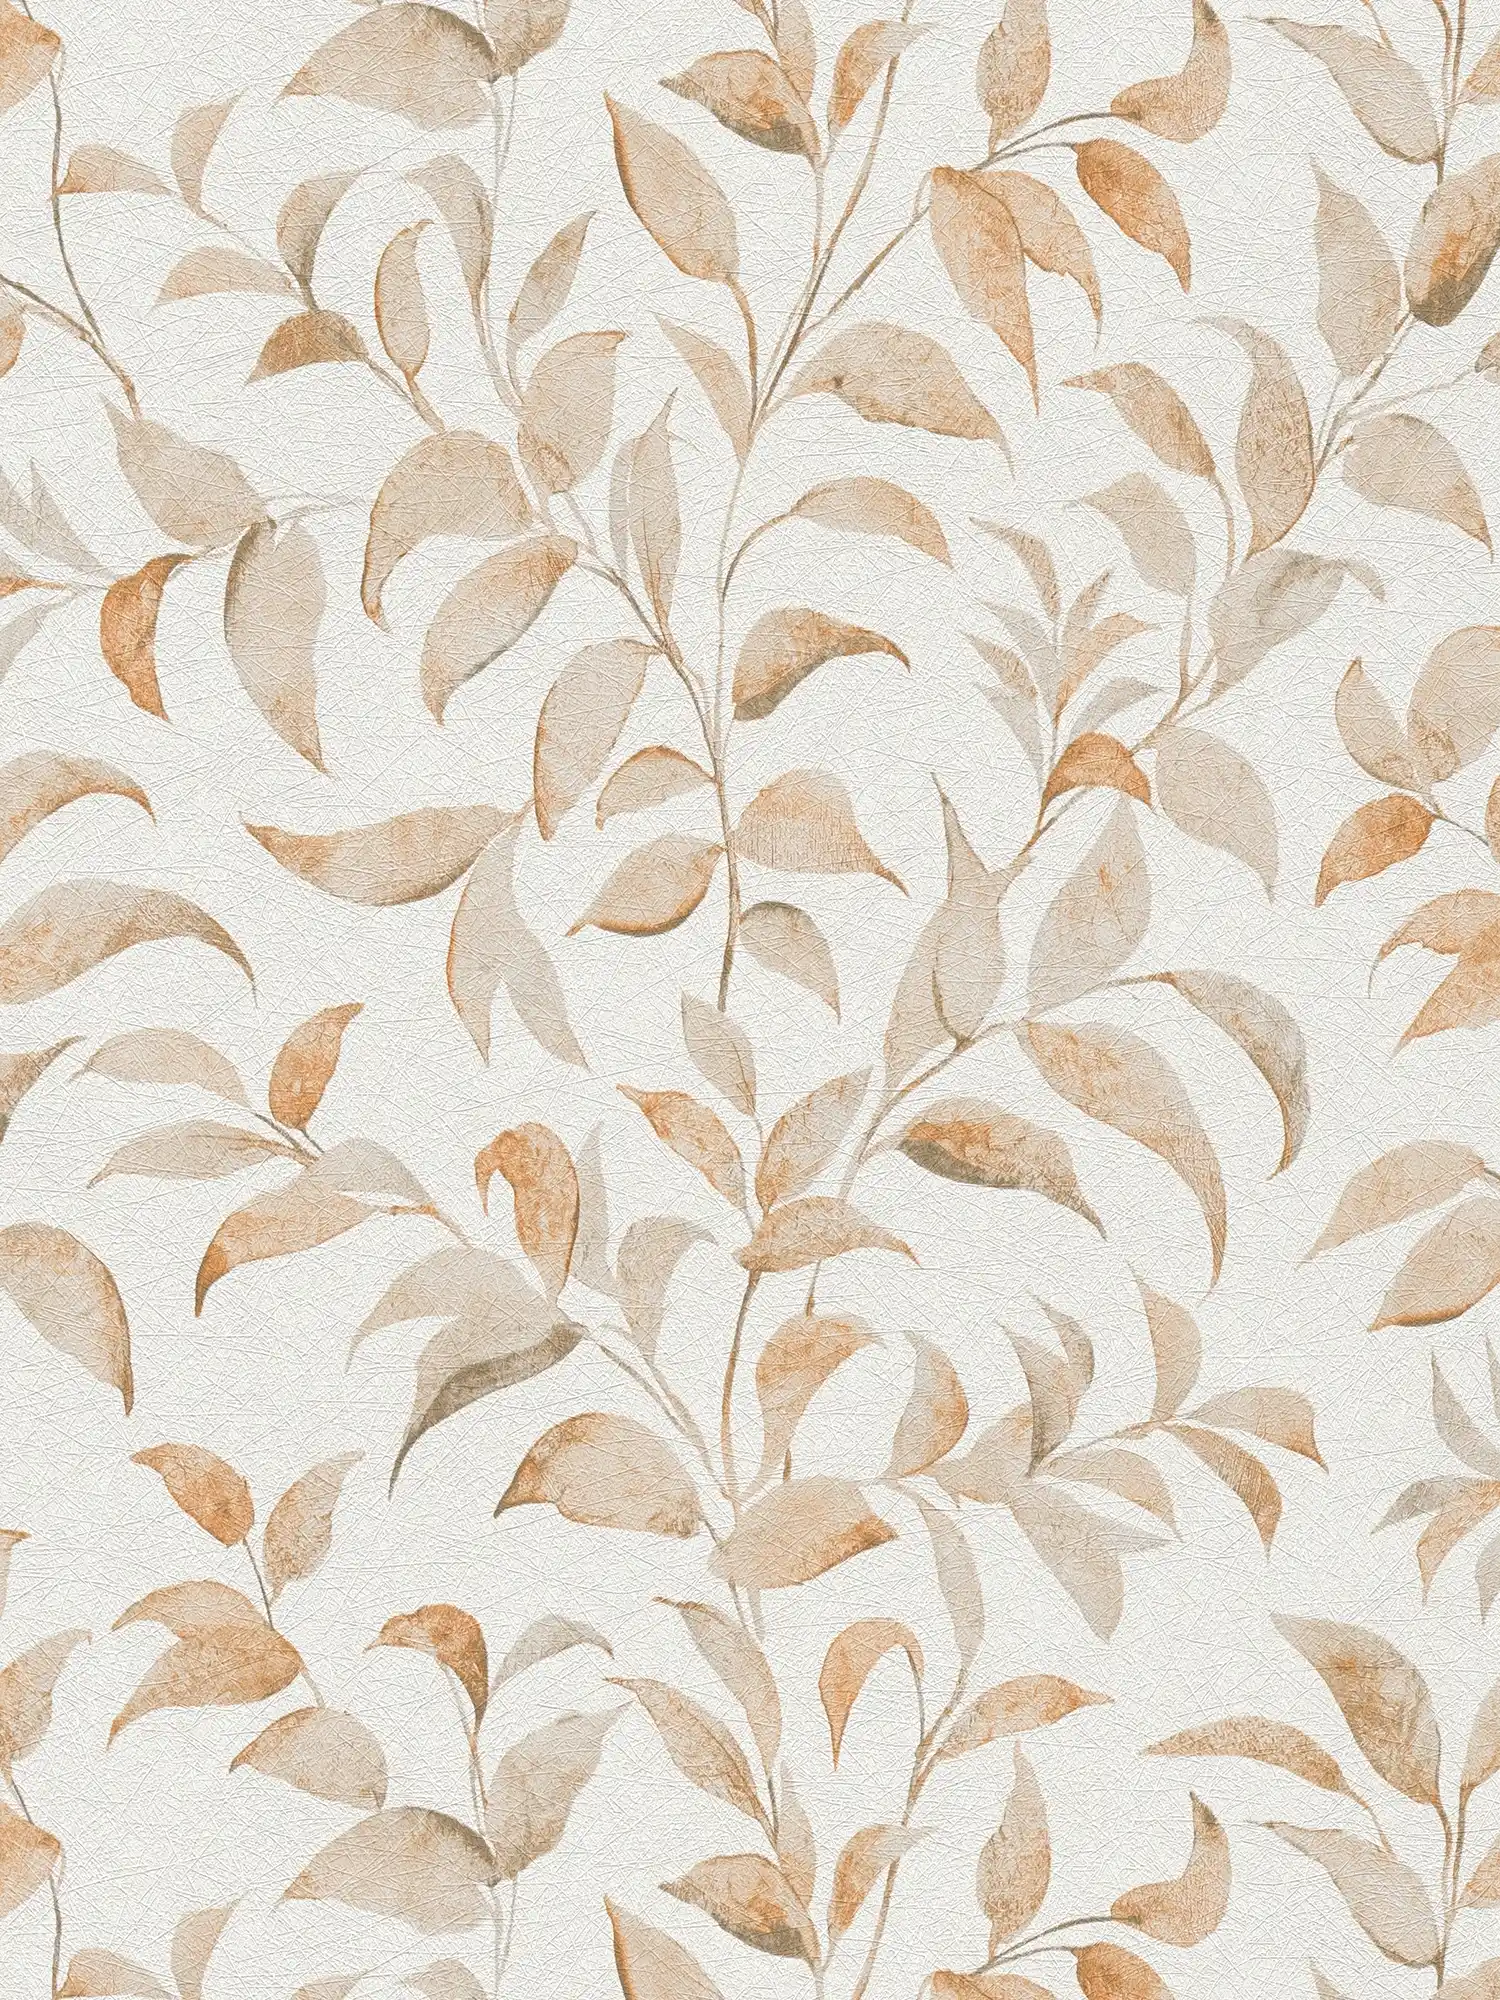 Leaves wallpaper floral shimmer textured - white, orange
